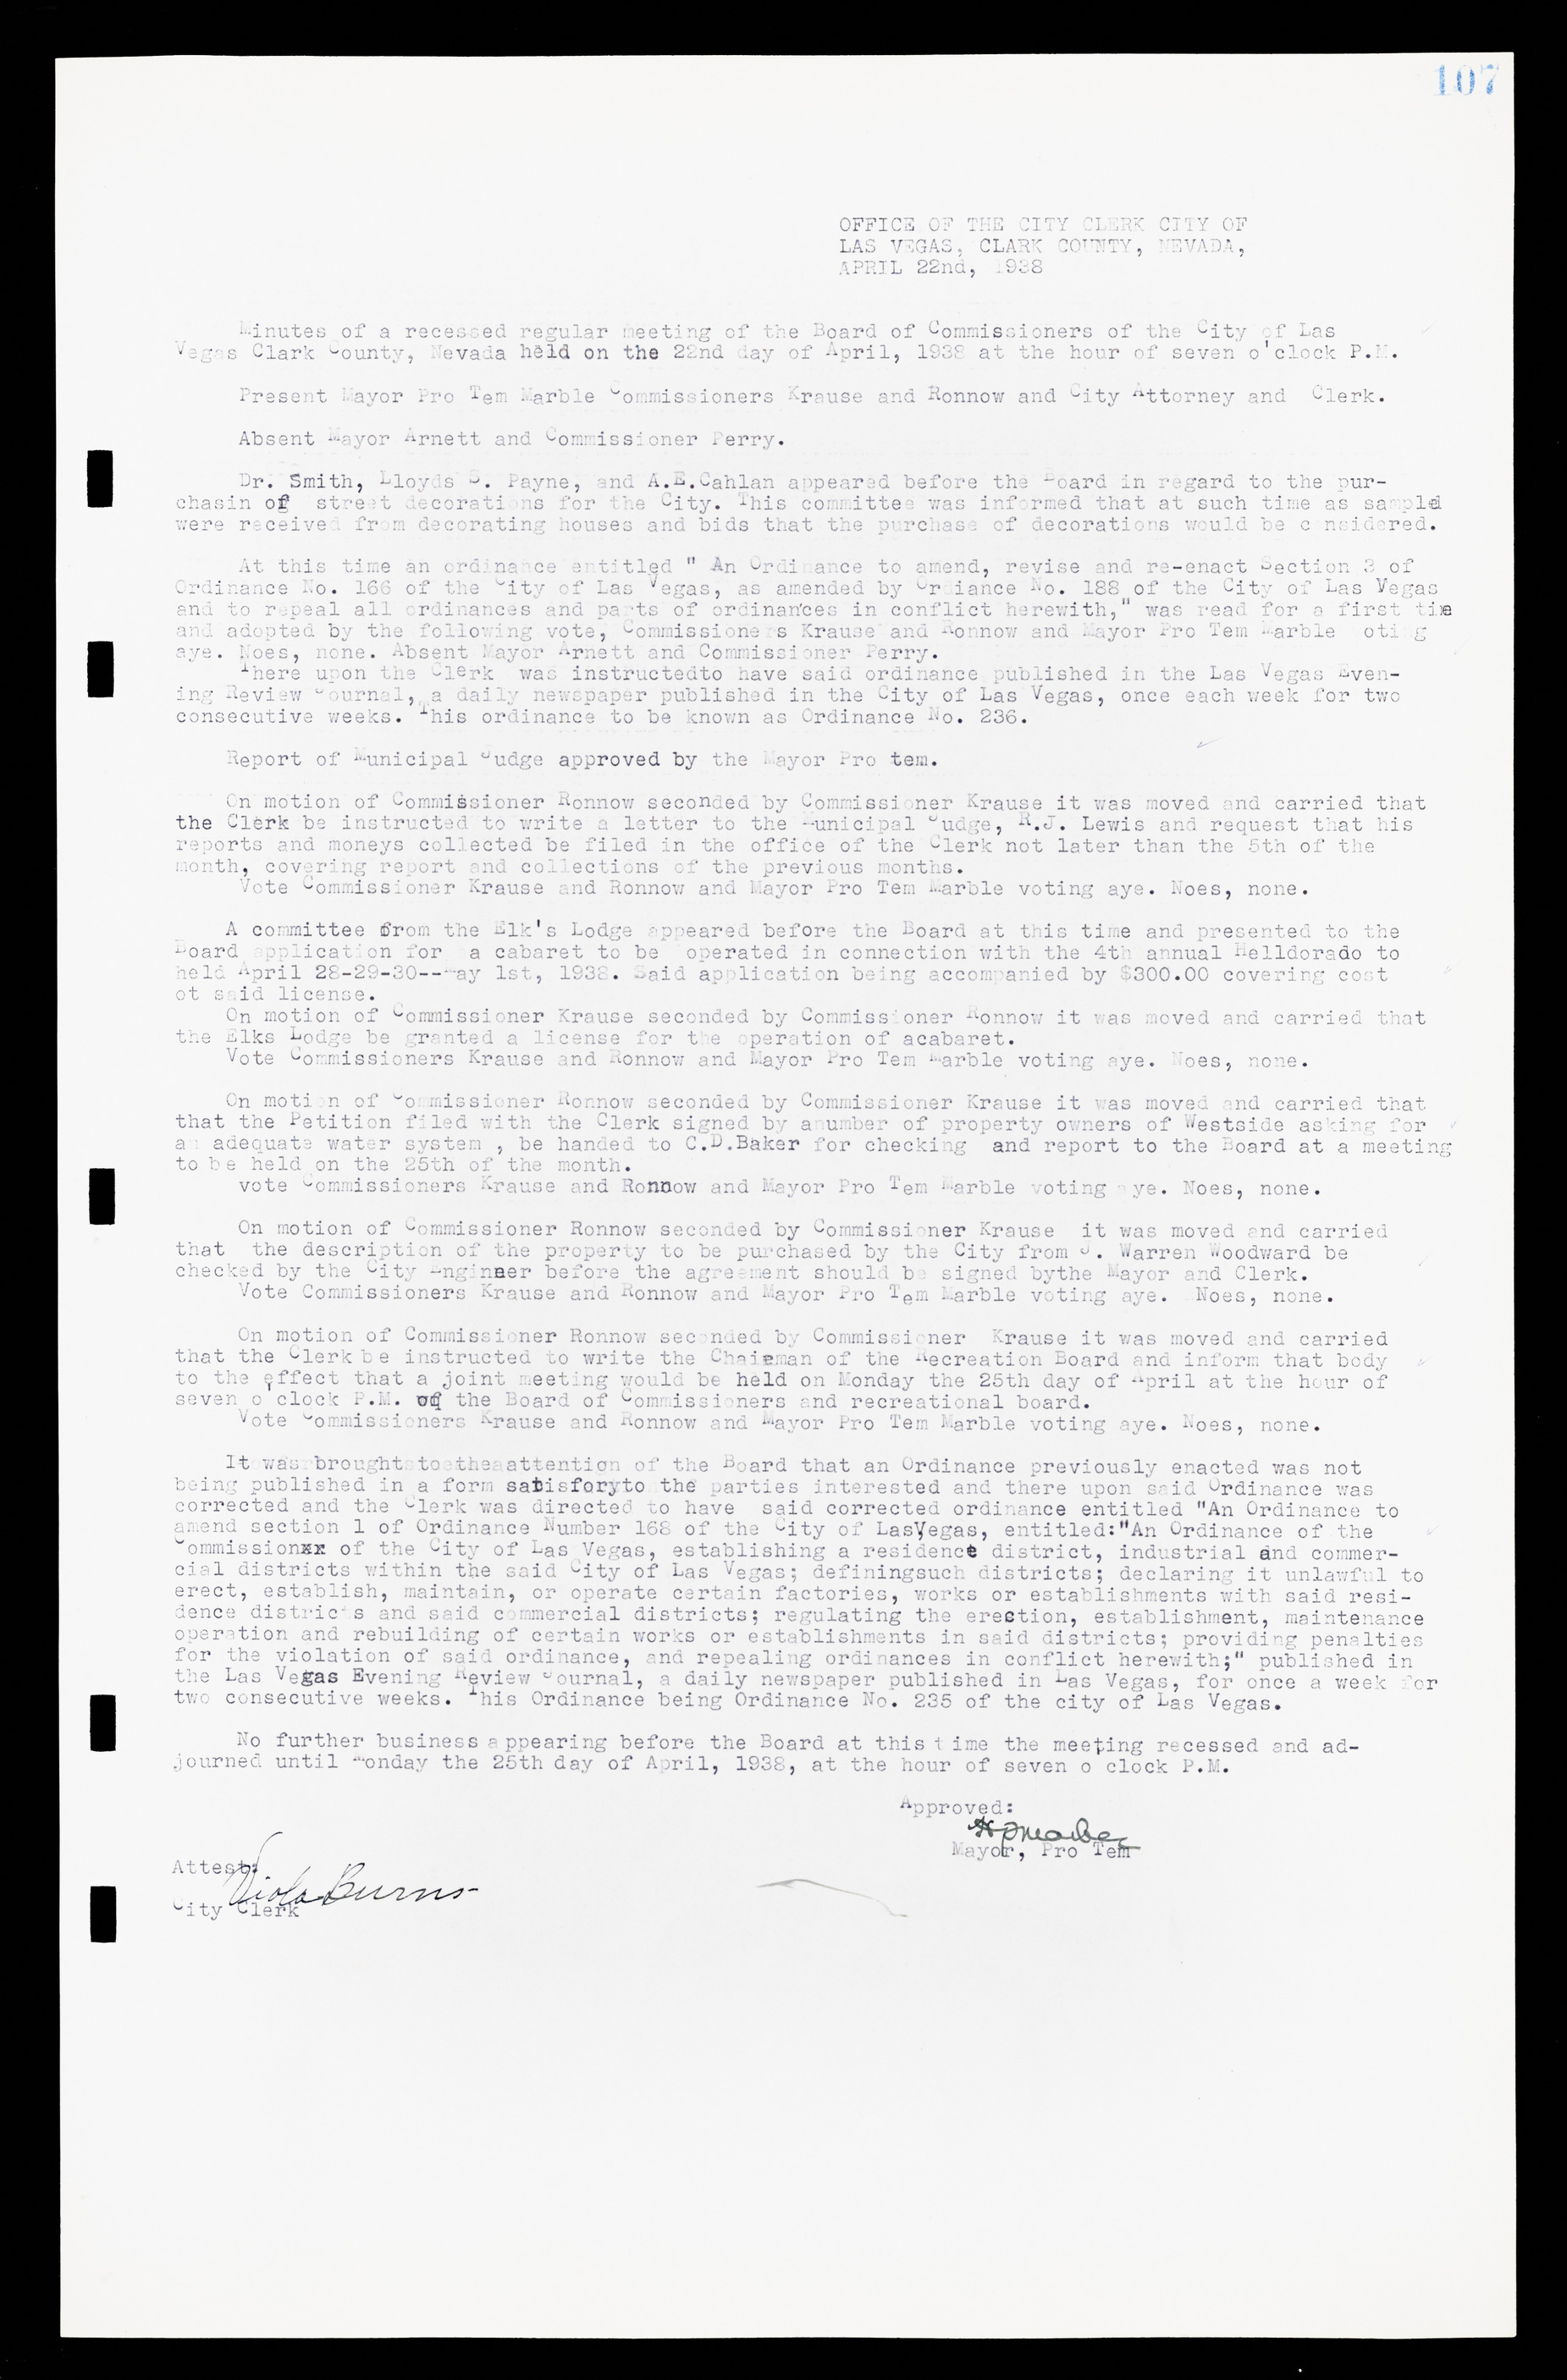 Las Vegas City Commission Minutes, February 17, 1937 to August 4, 1942, lvc000004-118